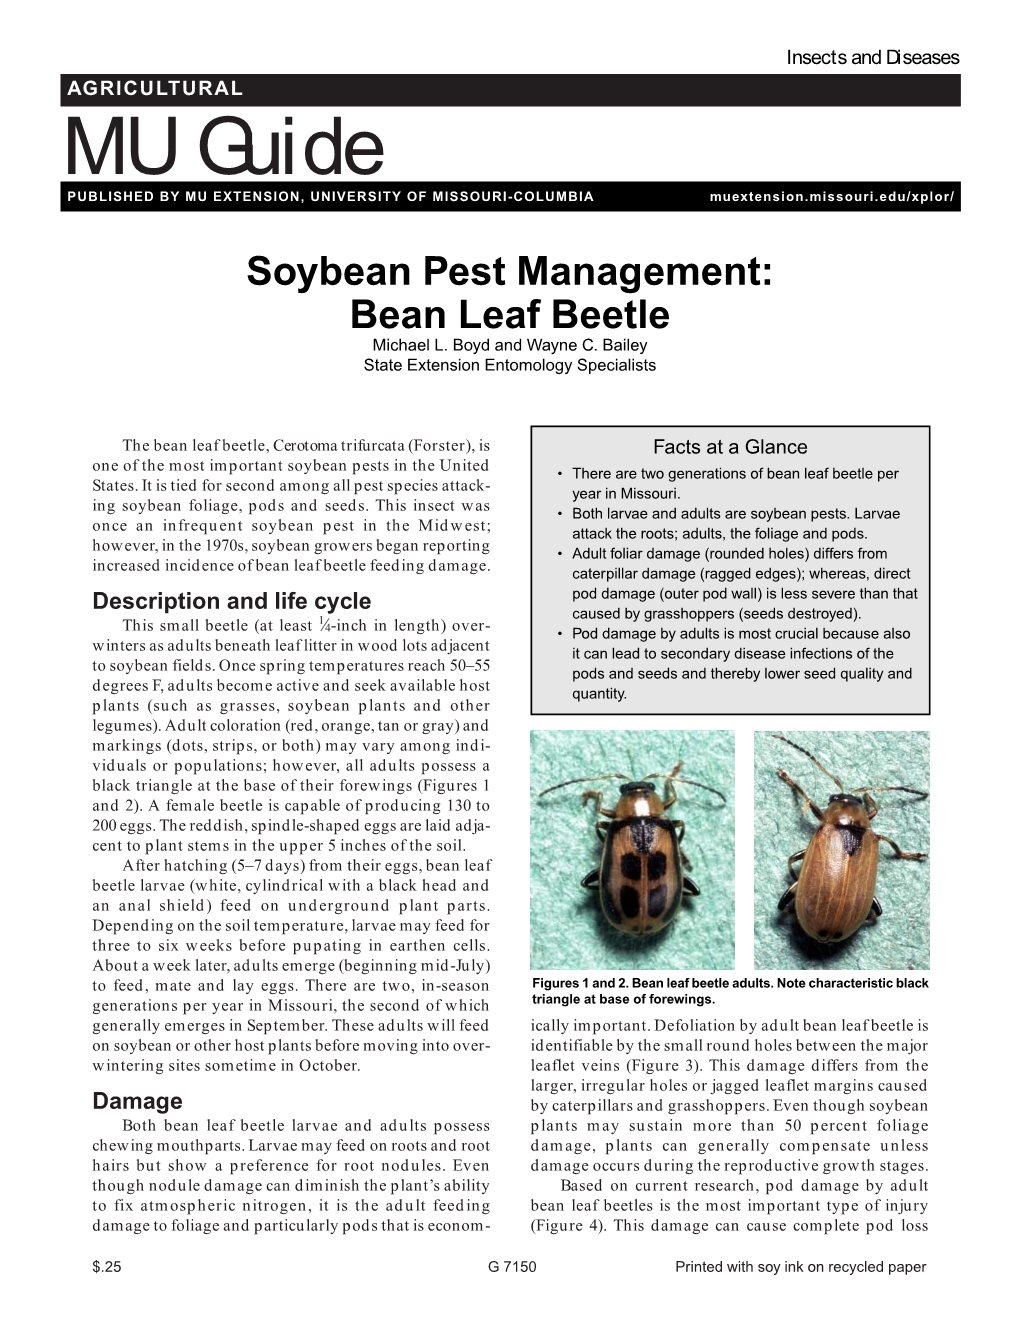 Bean Leaf Beetle Michael L